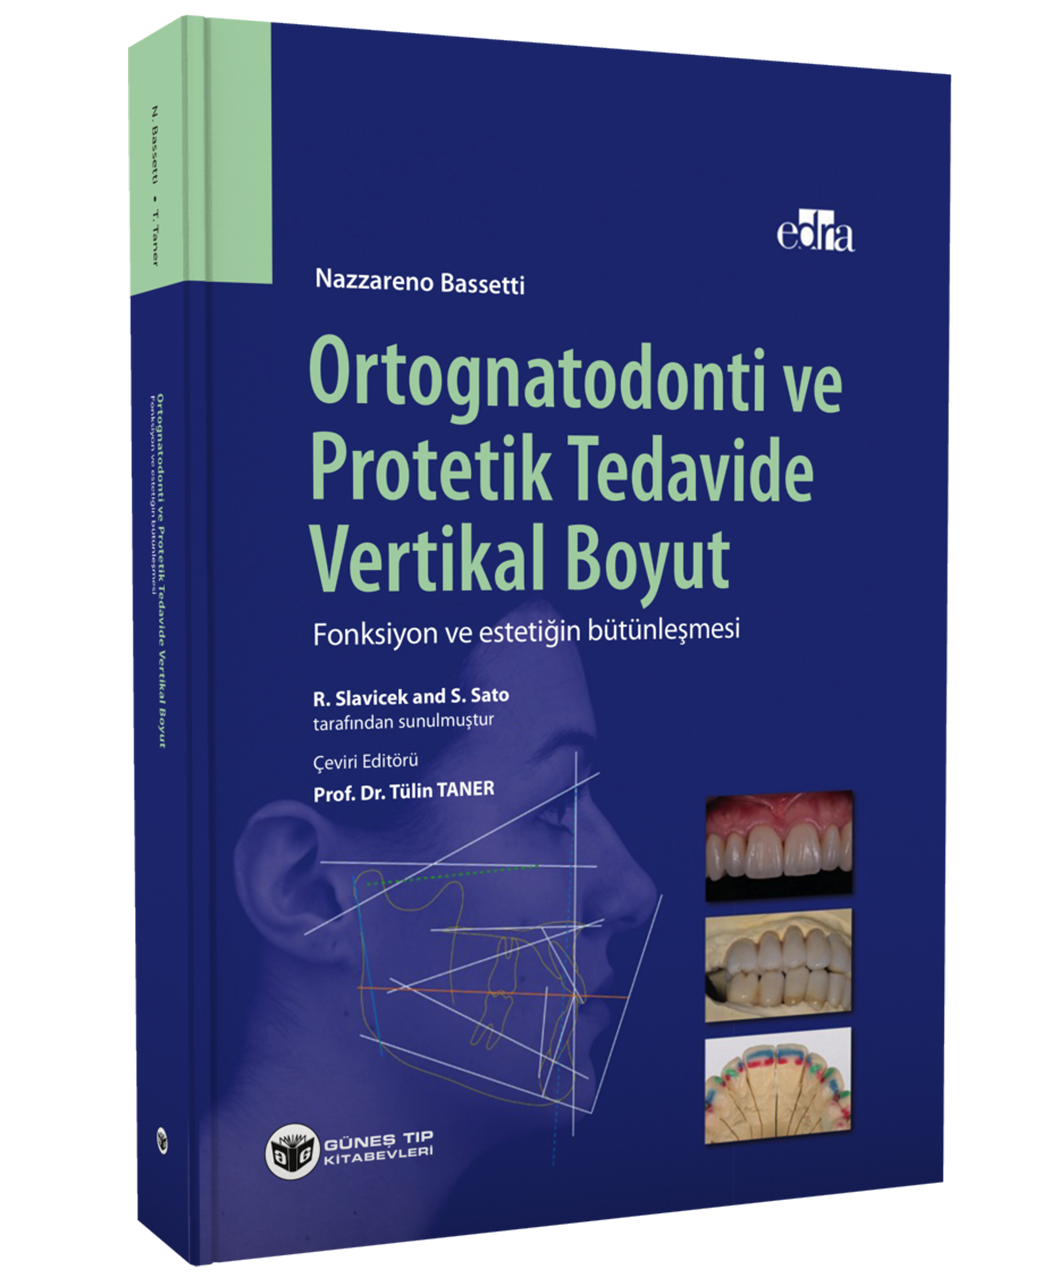 Ortognatodonti ve Protetik Tedavide Vertikal Boyut